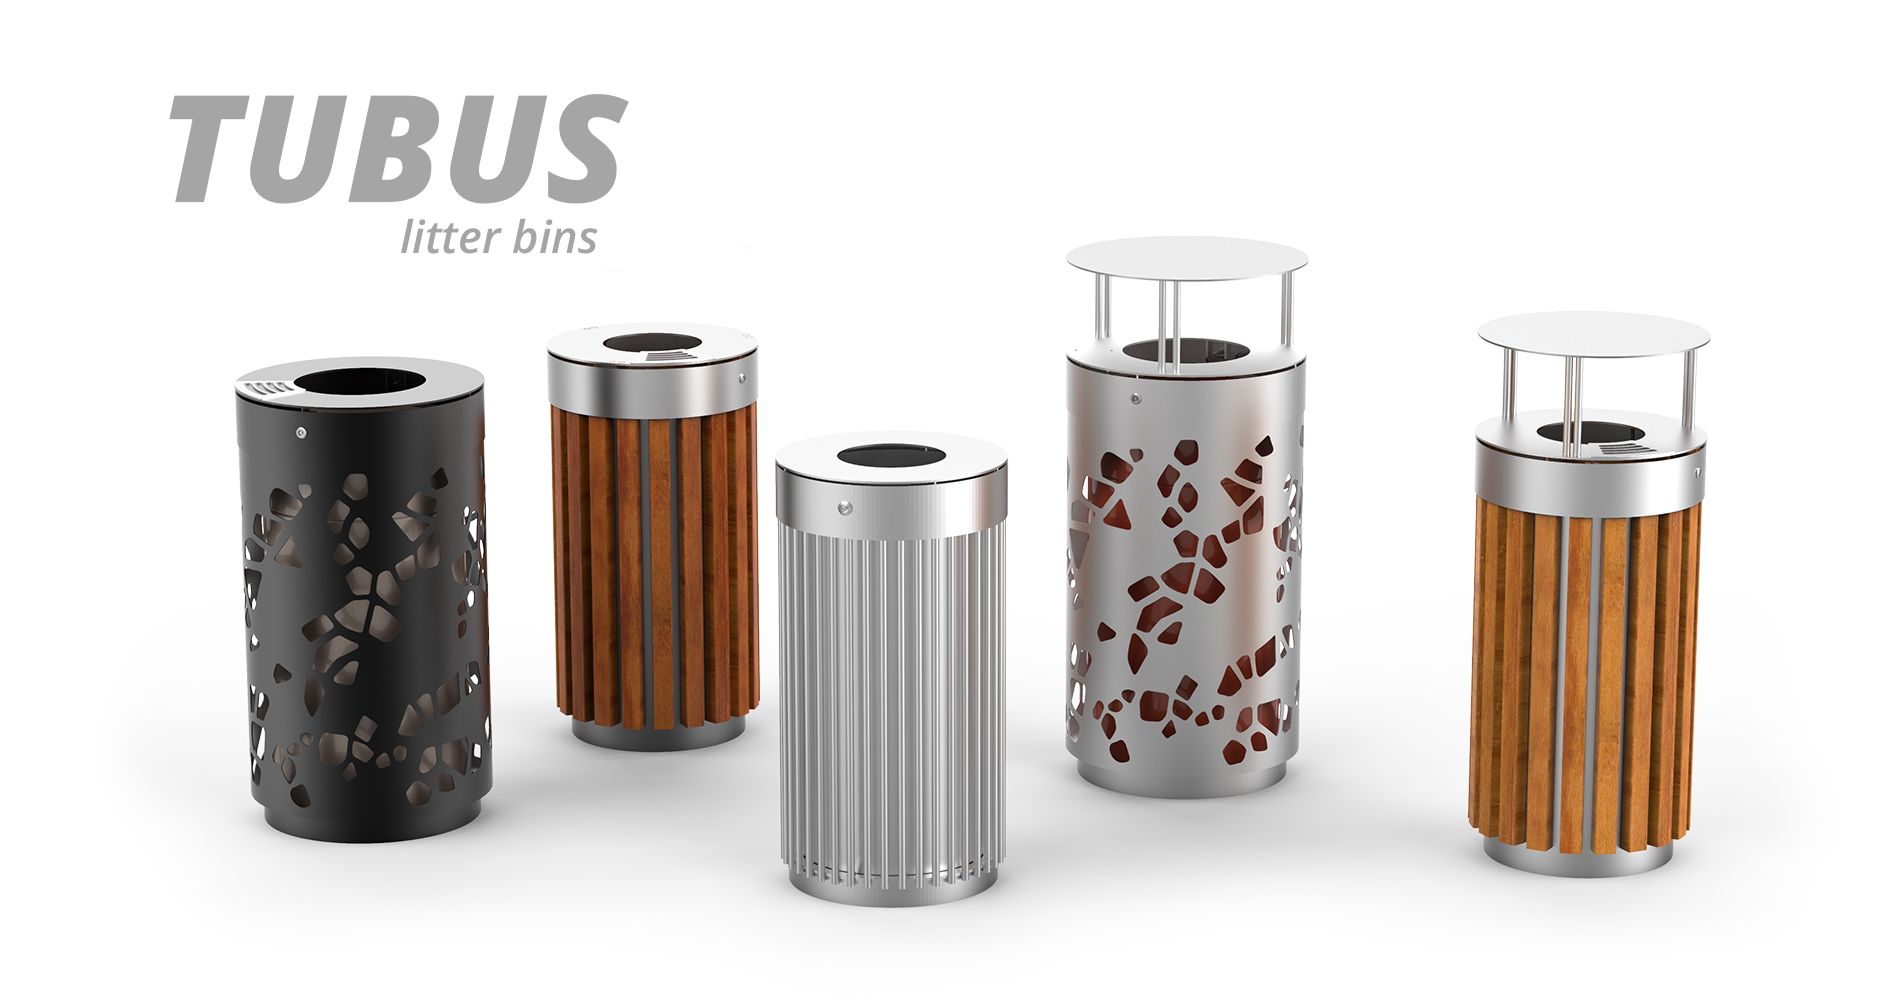 Tubus litter bins by ZANO Street Furniture